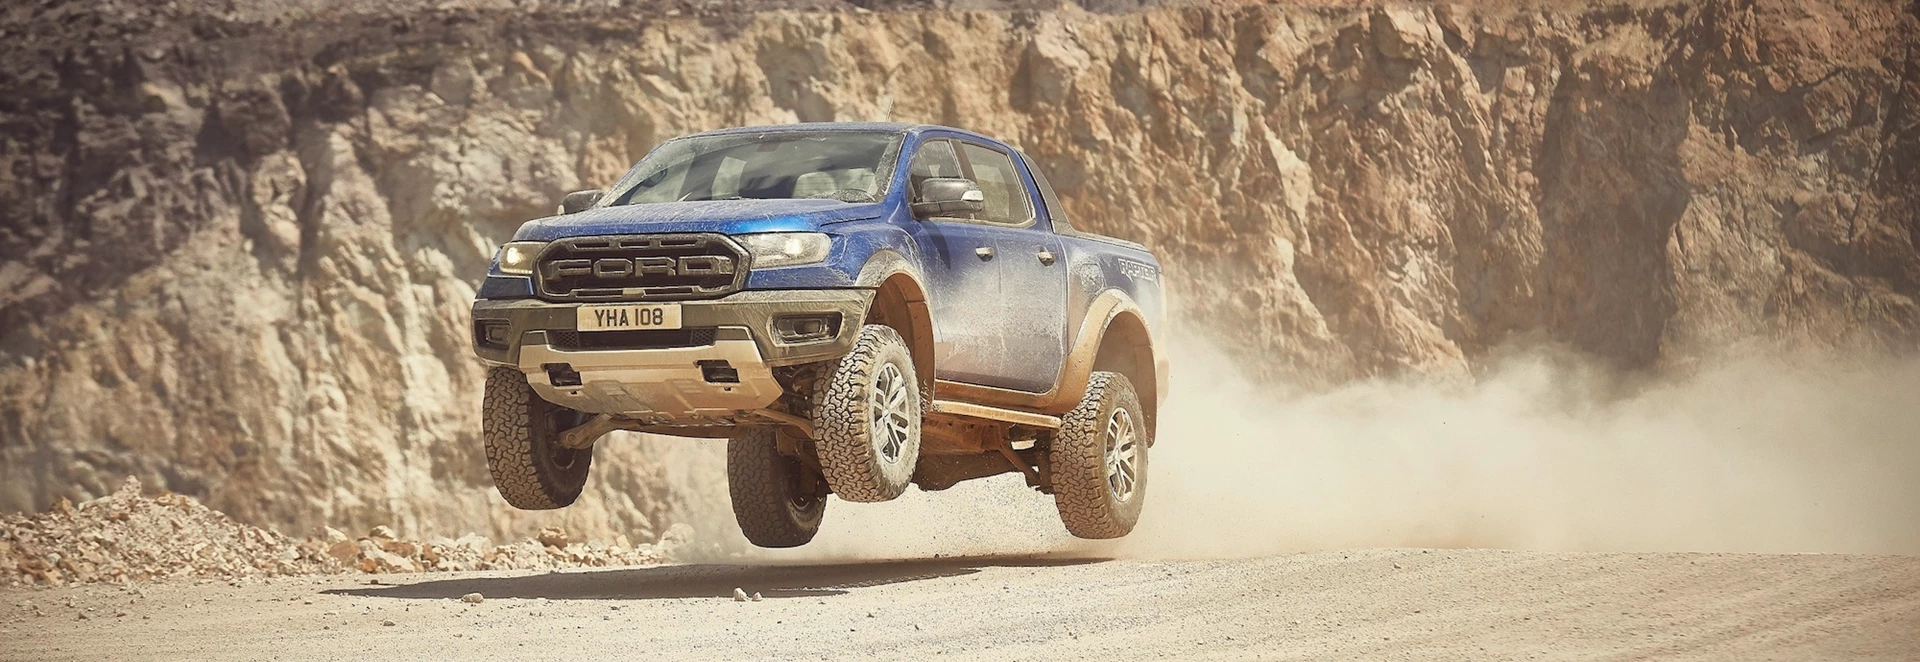 Ford confirms European version of Ranger Raptor performance pick-up